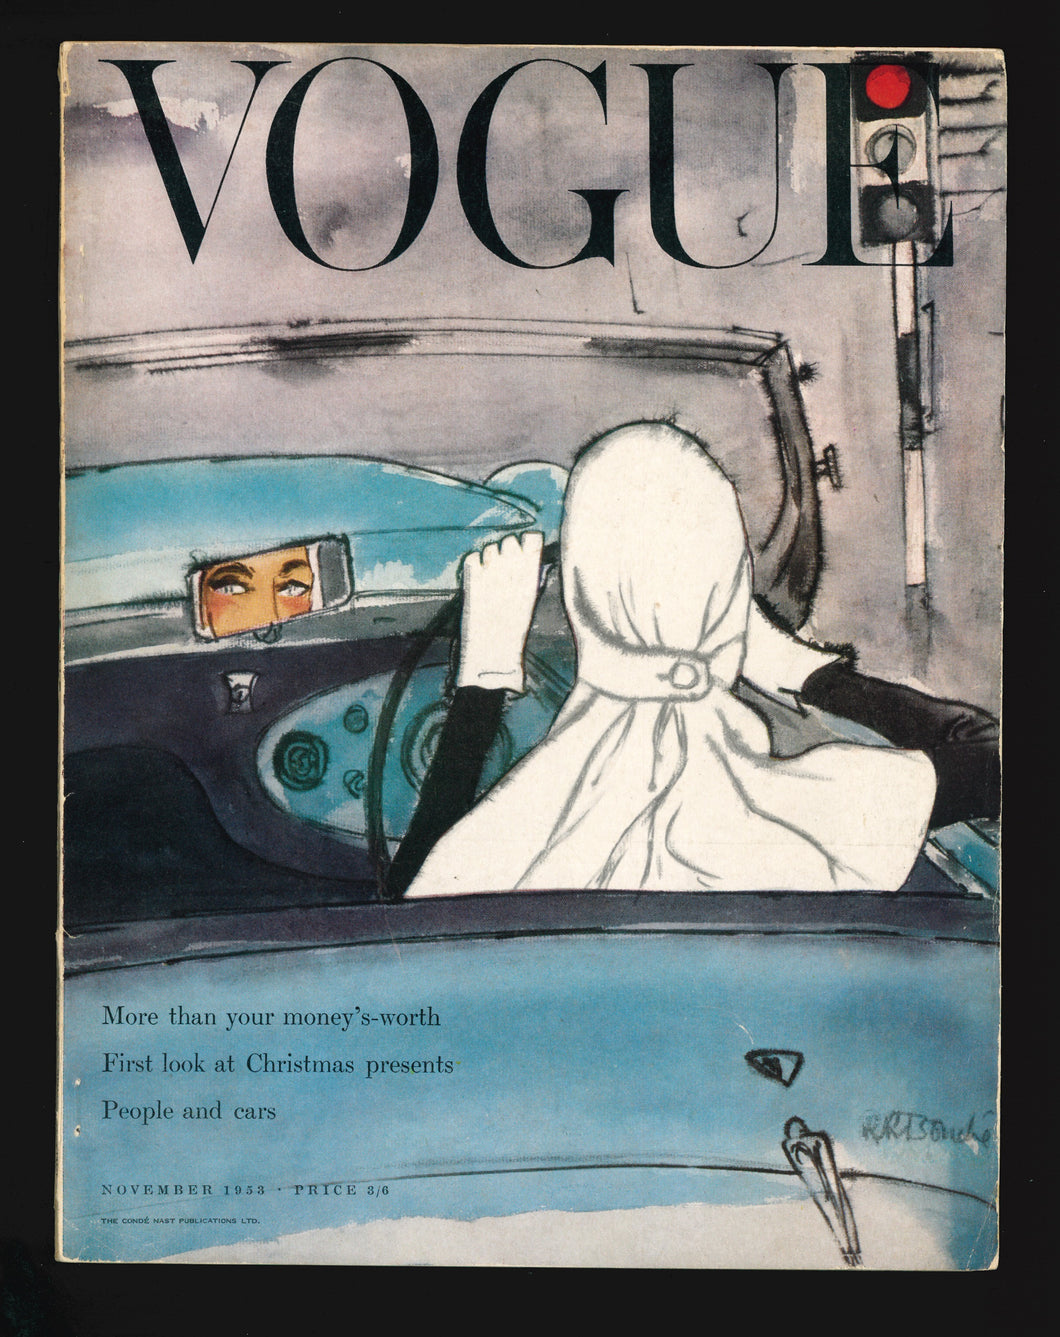 Vogue UK Nov 1953